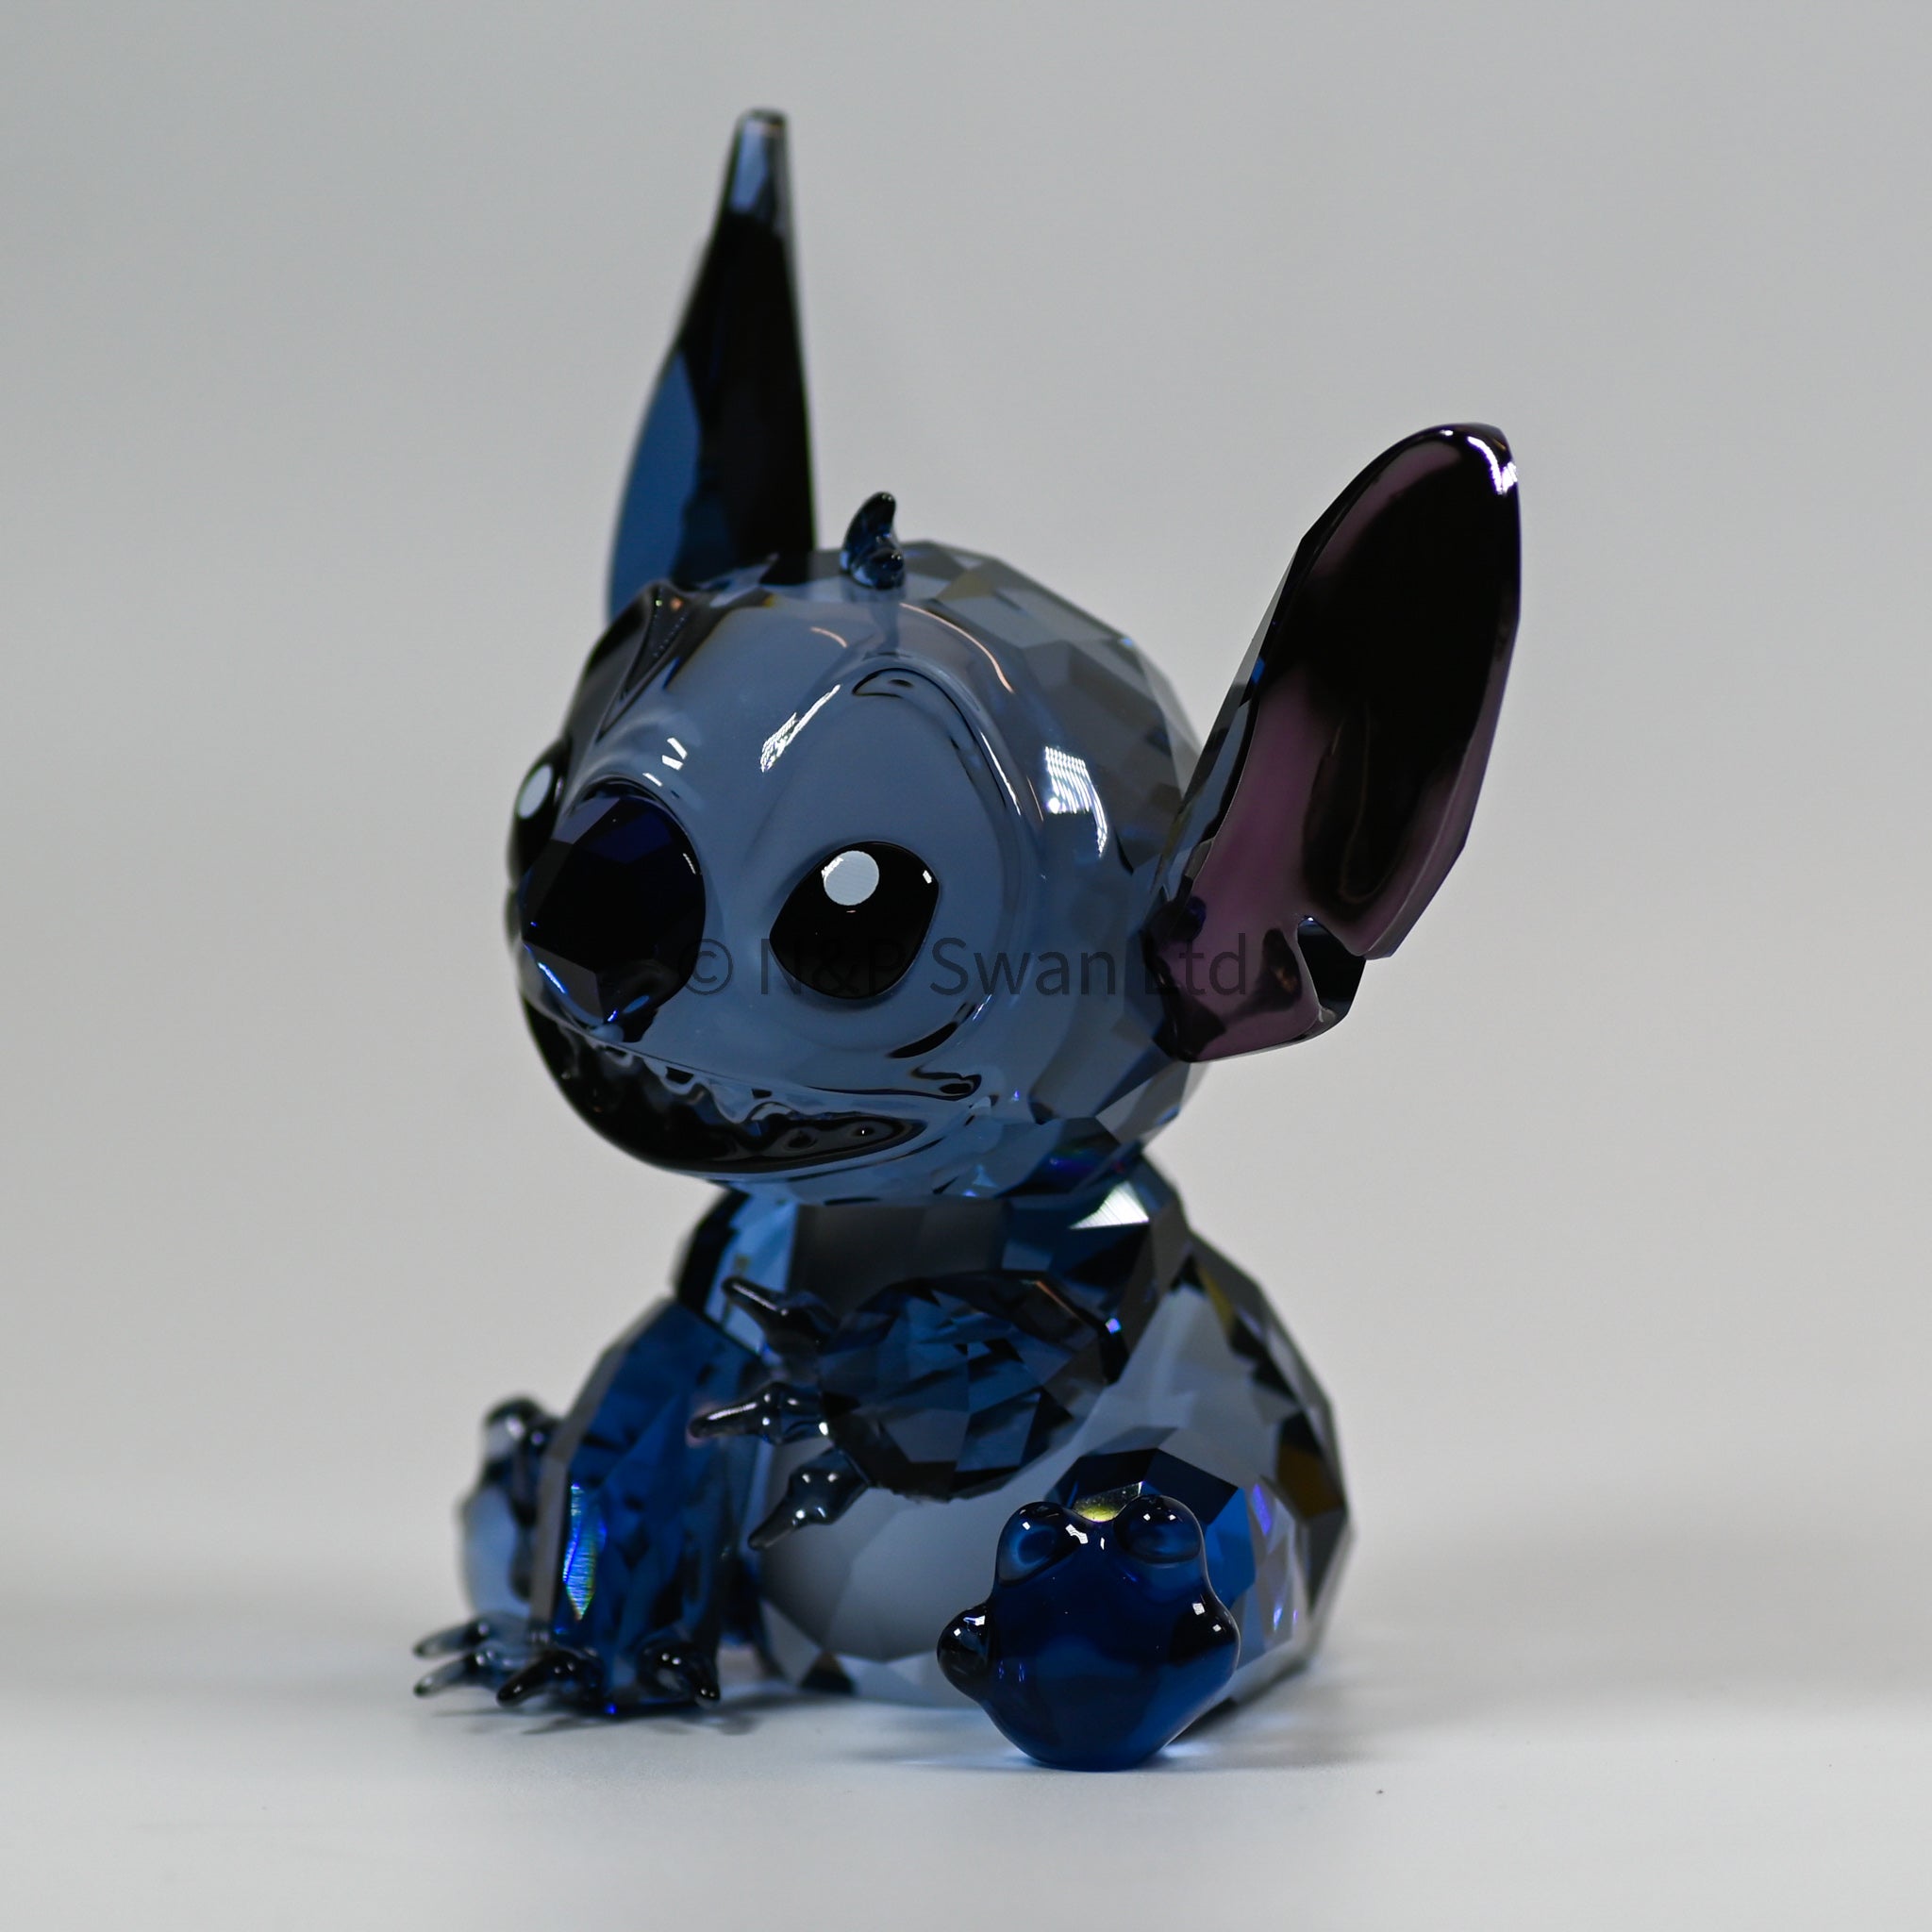 Swarovski Limited Edition Stitch - Disney - 1096800 | N&P Swan ltd